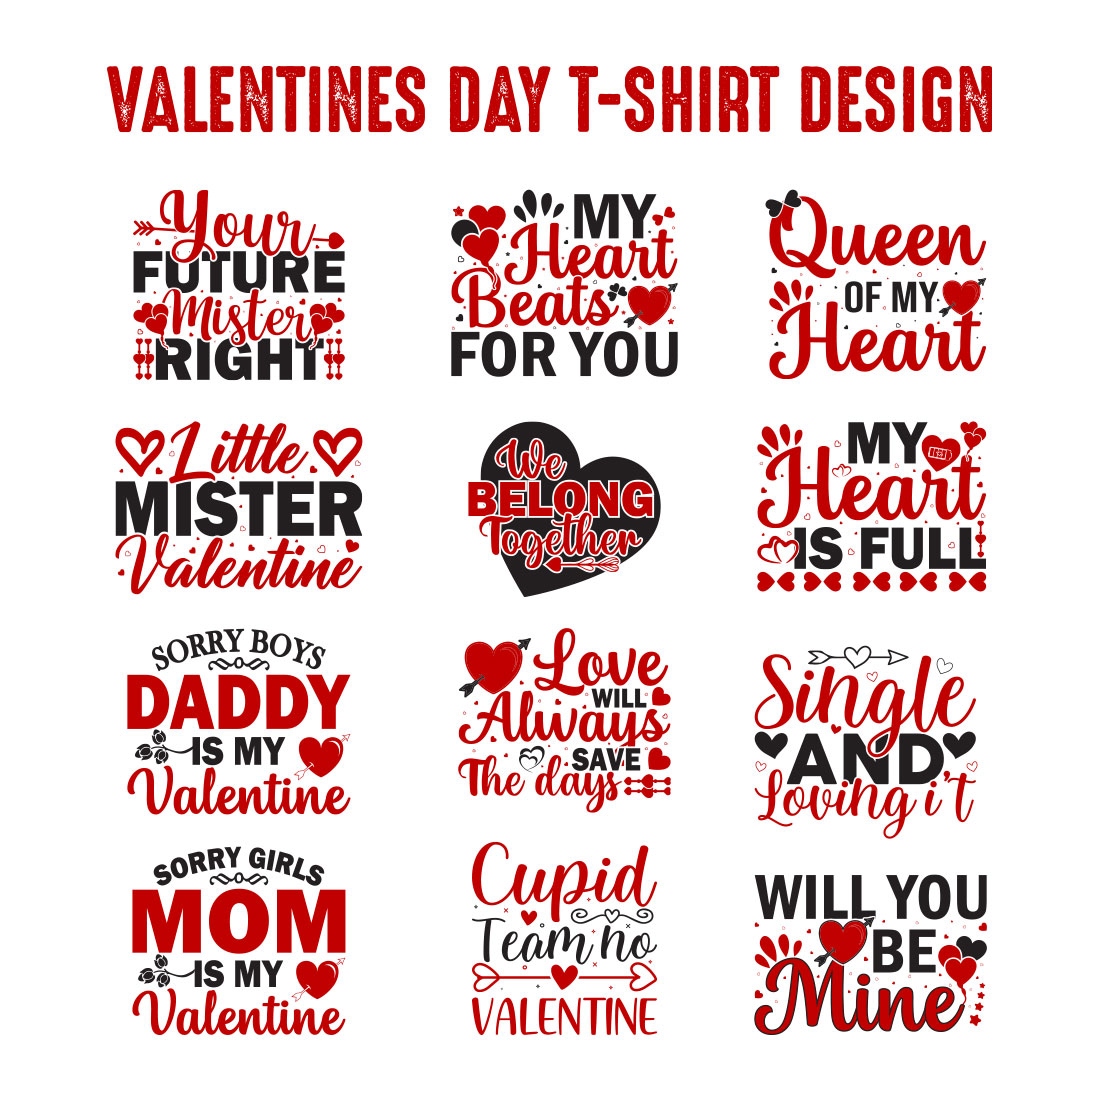 Valentines Day T-Shirt Design Bundle cover image.